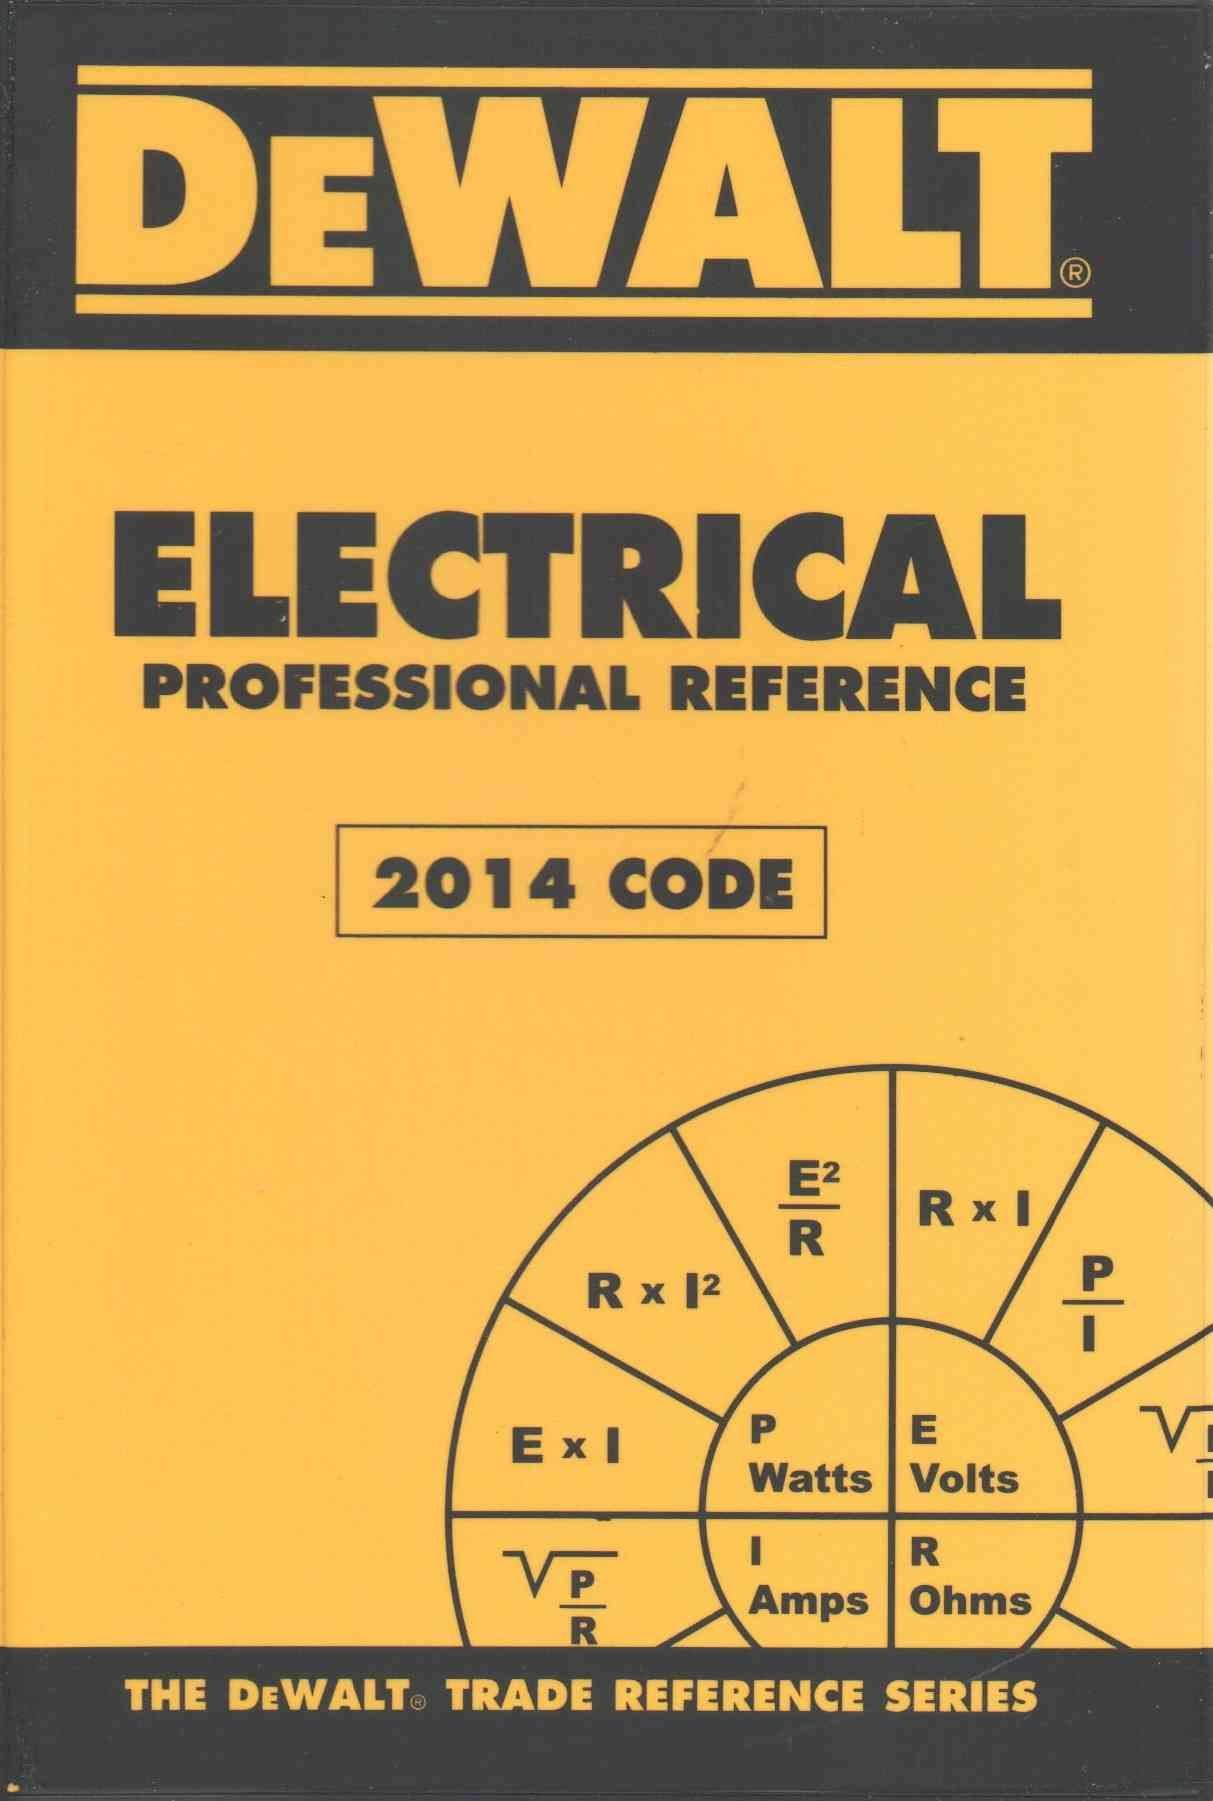 DEWALT Electrical Professional Reference 2014